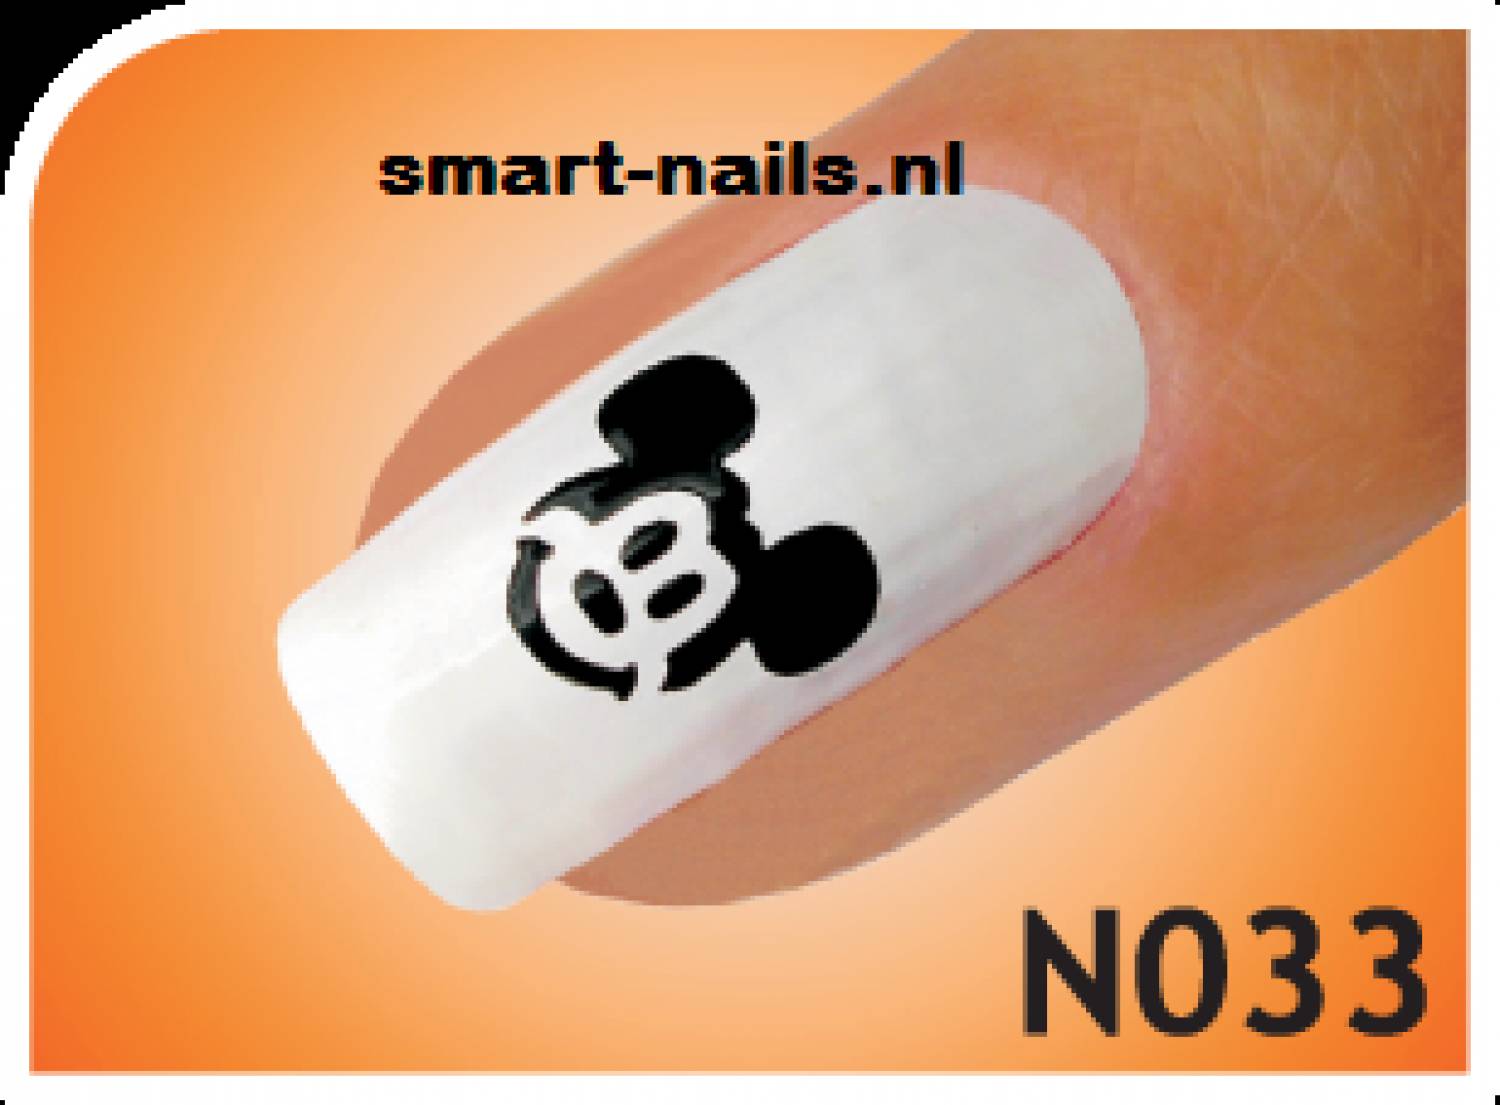 smART nails N033 - smART nails Benelux distributeur van Nederland ...